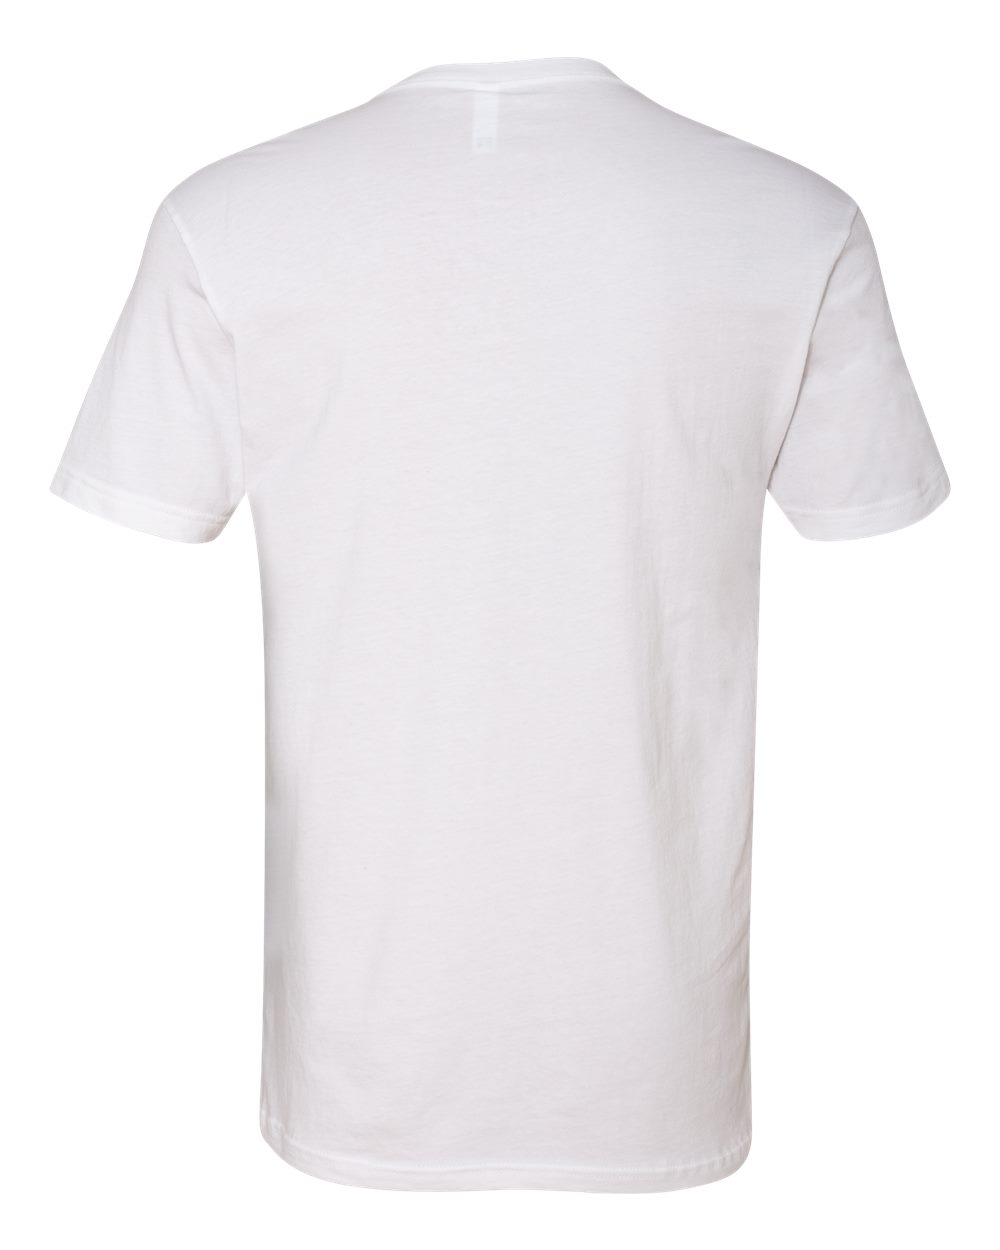 Next Level Mens Premium Short Sleeve V Neck Blank Plain T Shirt 3200 up ...